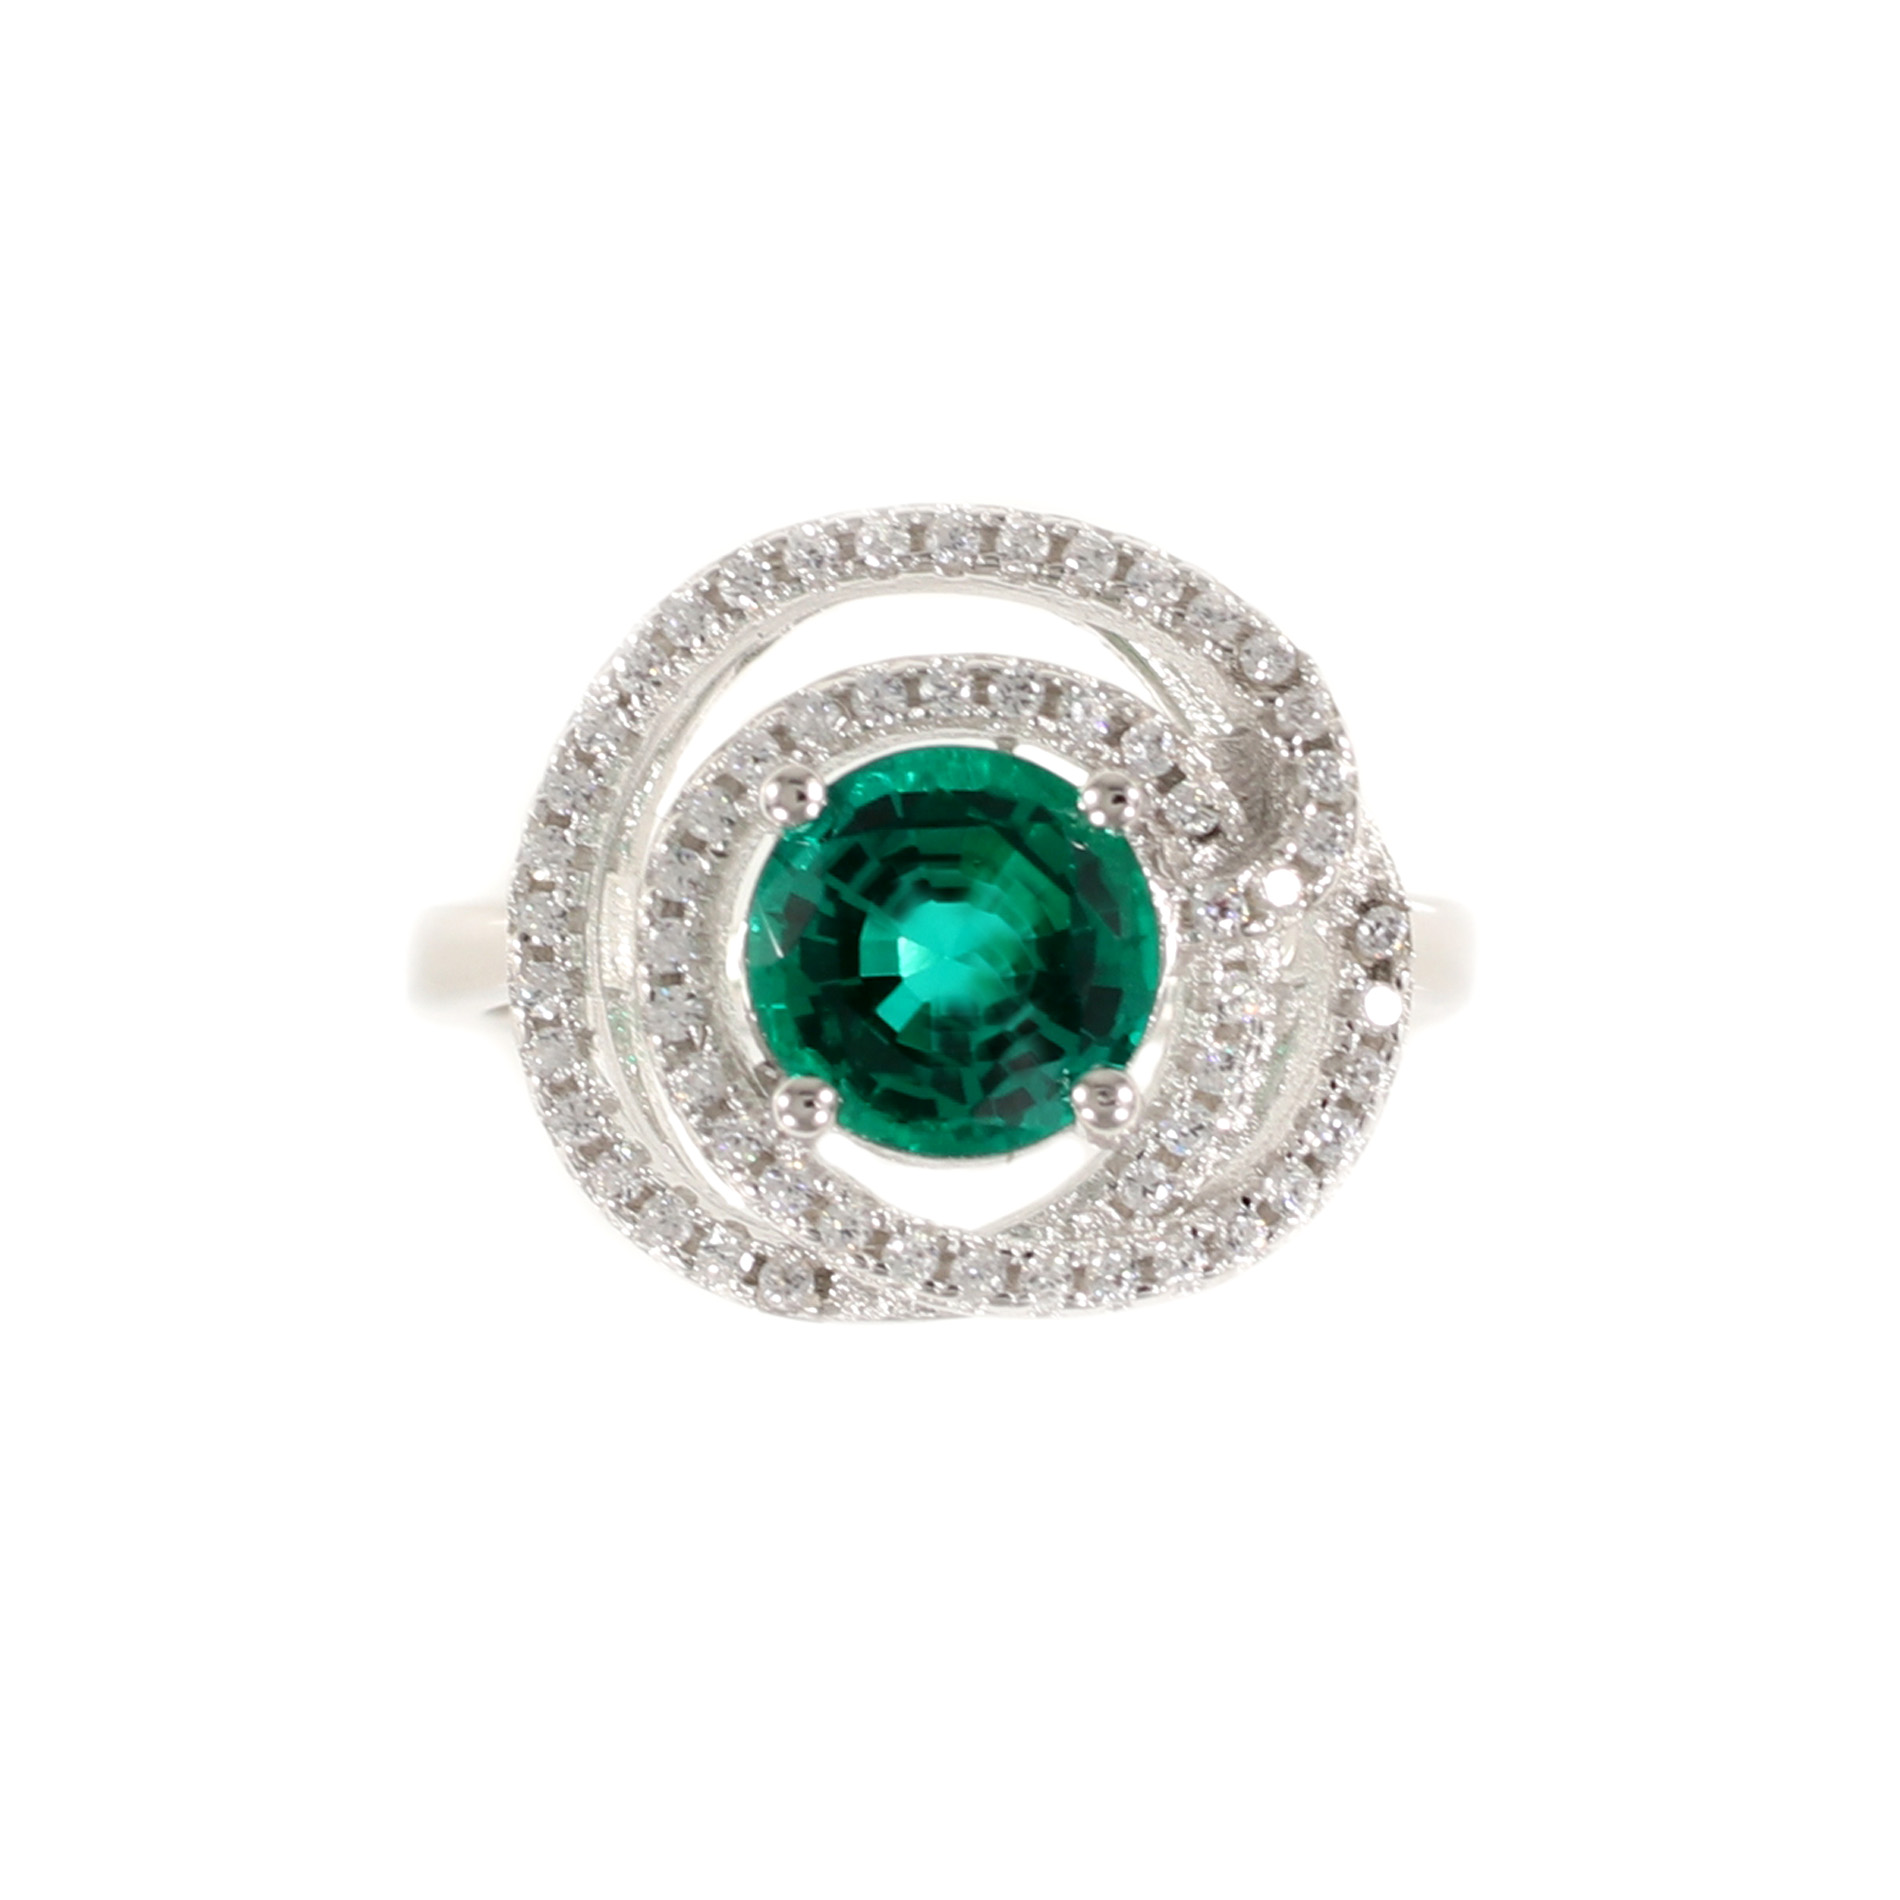 Tamara G Designs | Double Spiral Halo Ring